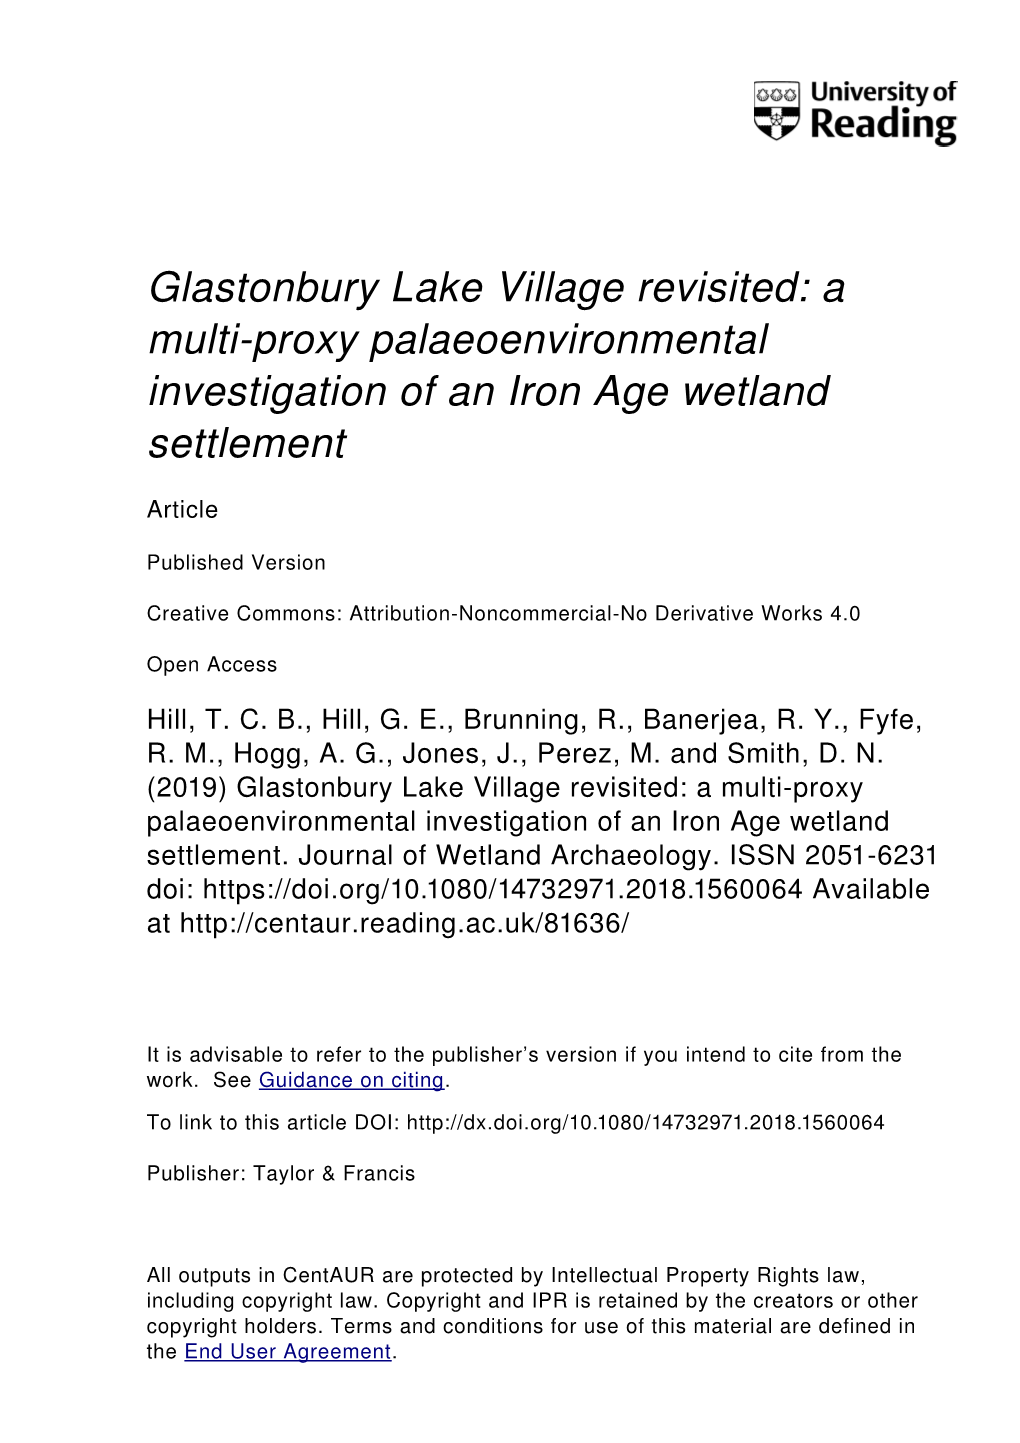 Glastonbury Lake Village Revisited: a Multi-Proxy Palaeoenvironmental Investigation of an Iron Age Wetland Settlement